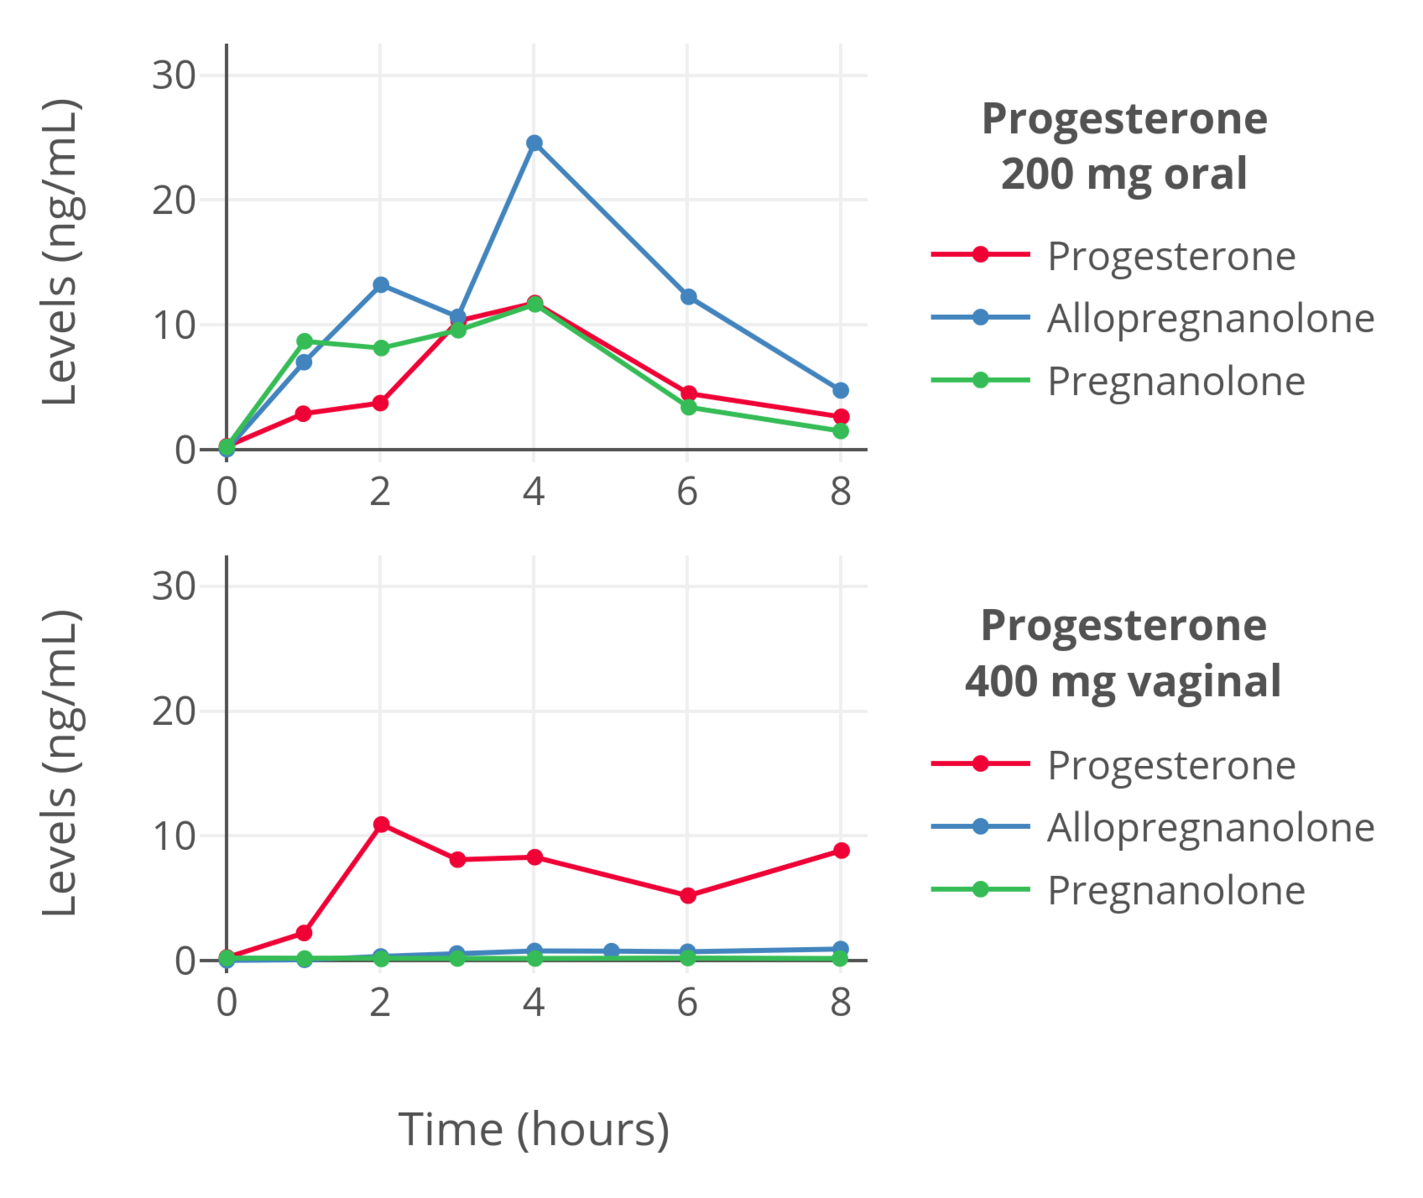 1423px-Progesterone,_allopregnanolone,_and_pregnanolone_levels_with_200_mg_oral_progesterone_or_400_mg_vaginal_progesterone